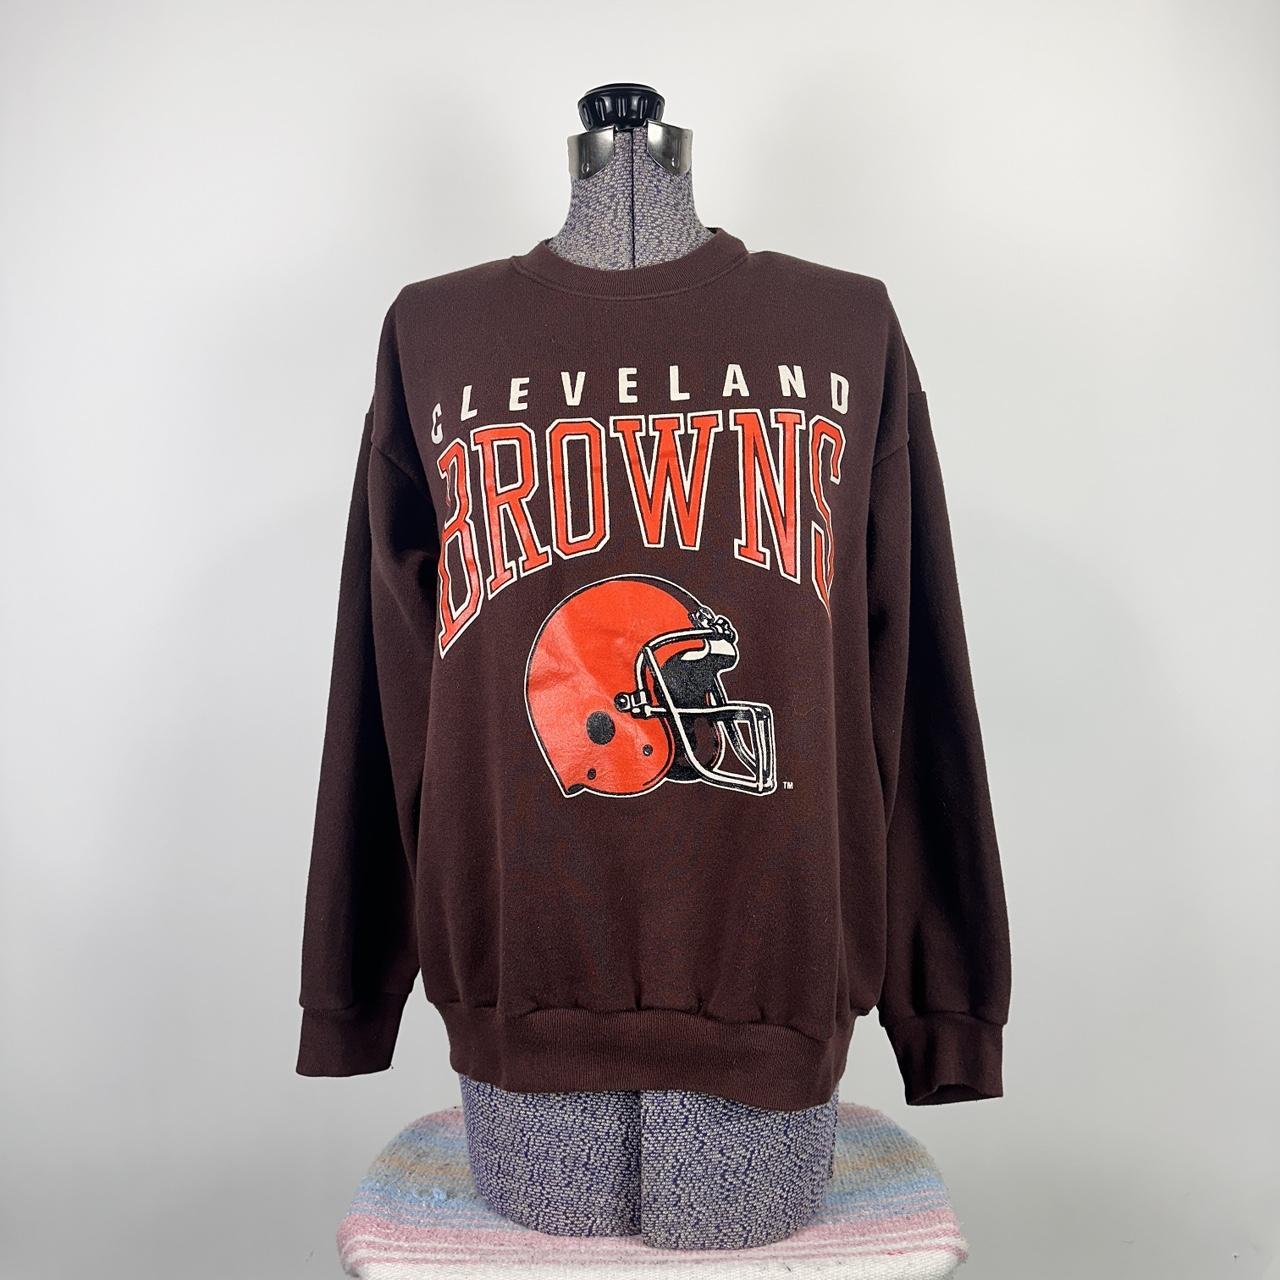 Cleveland Browns Crewneck Sweatshirts for Sale